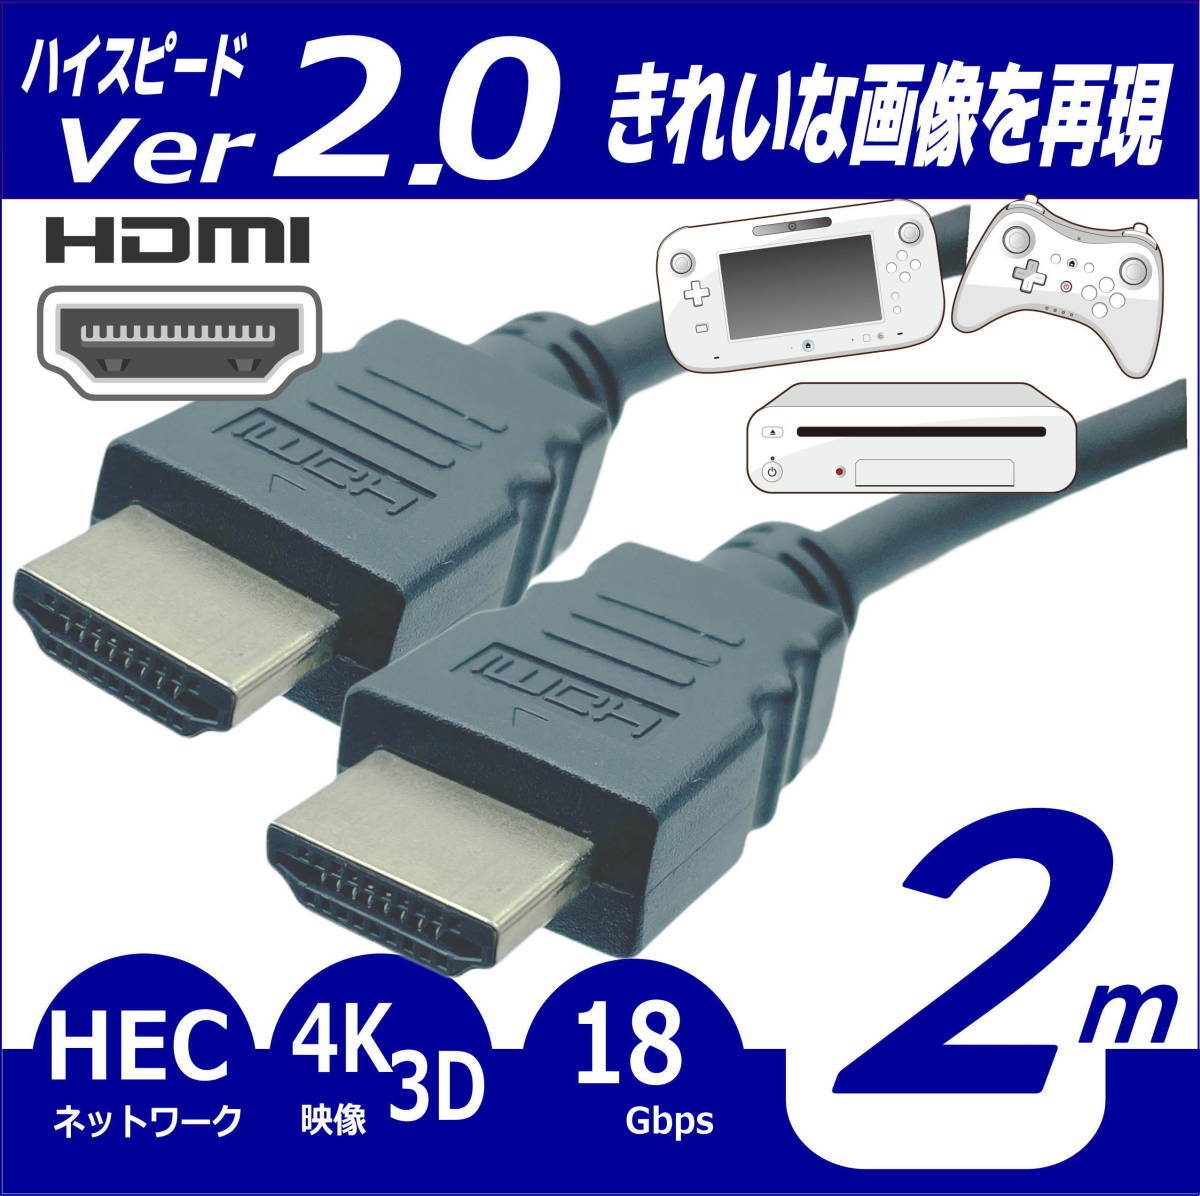 □HDMIケーブル 2m プレミアム高速 Ver2.0 4KフルHD 3D 60fps ネットワーク 対応 2HDMI-20 【送料無料】◆■_画像1